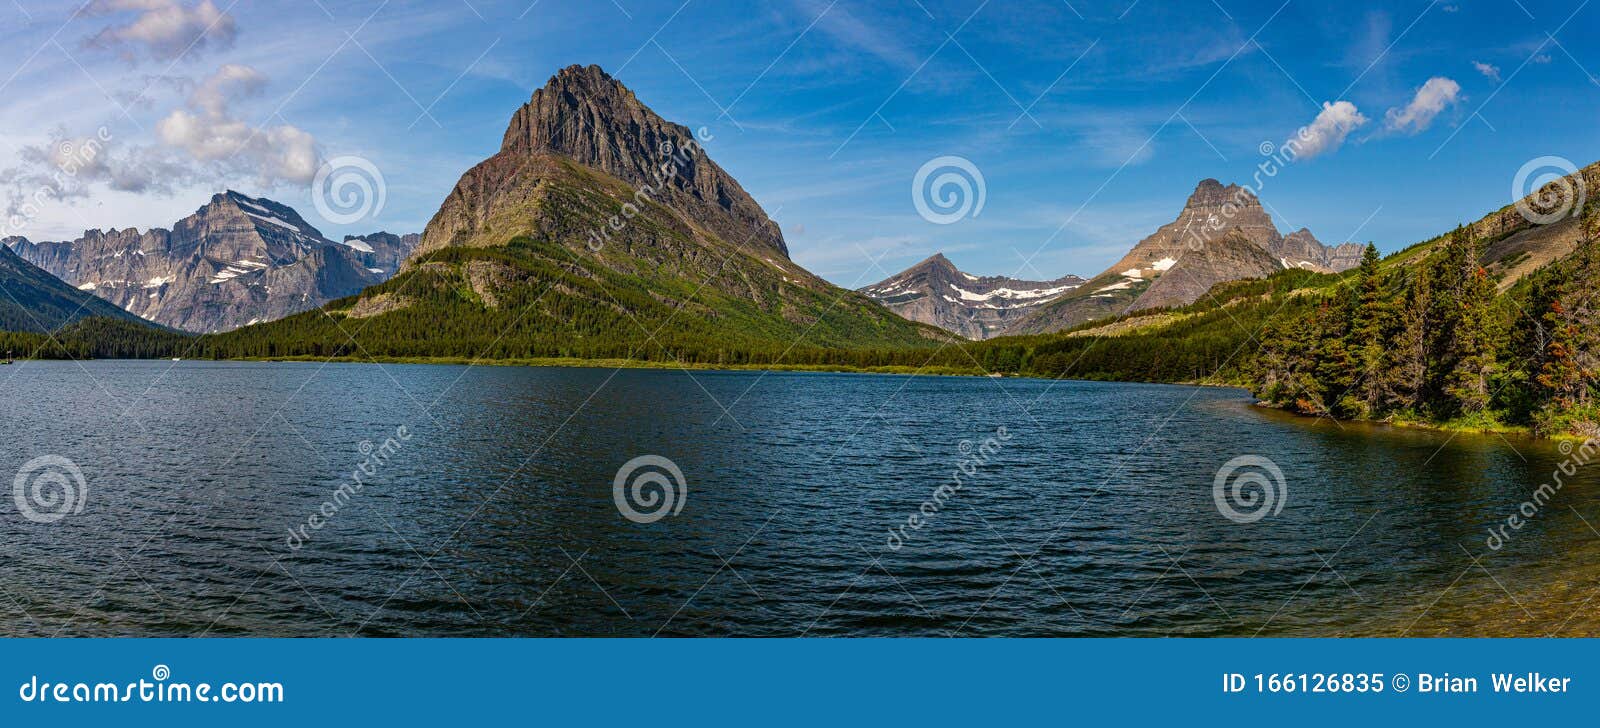 fishercap lake glacier national park